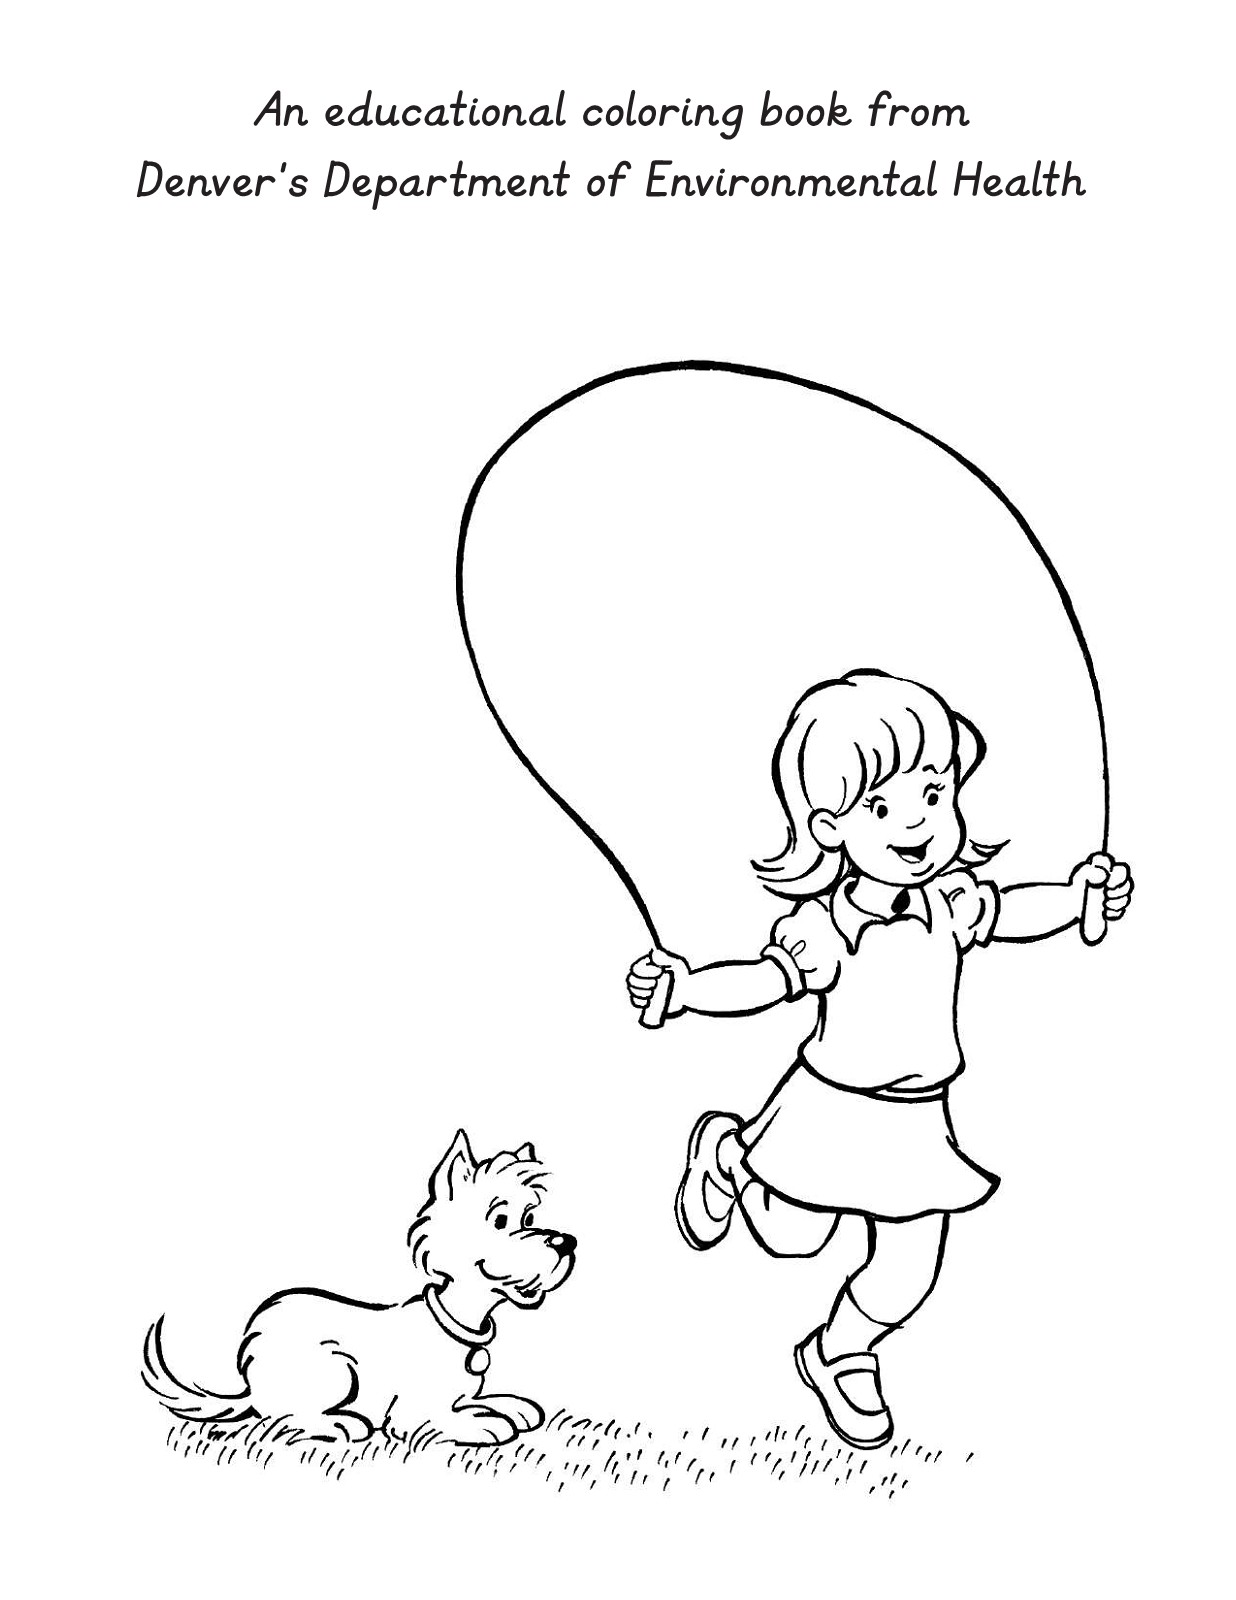 Top fun childrens coloring books pdf free download for kindergarten and preschool